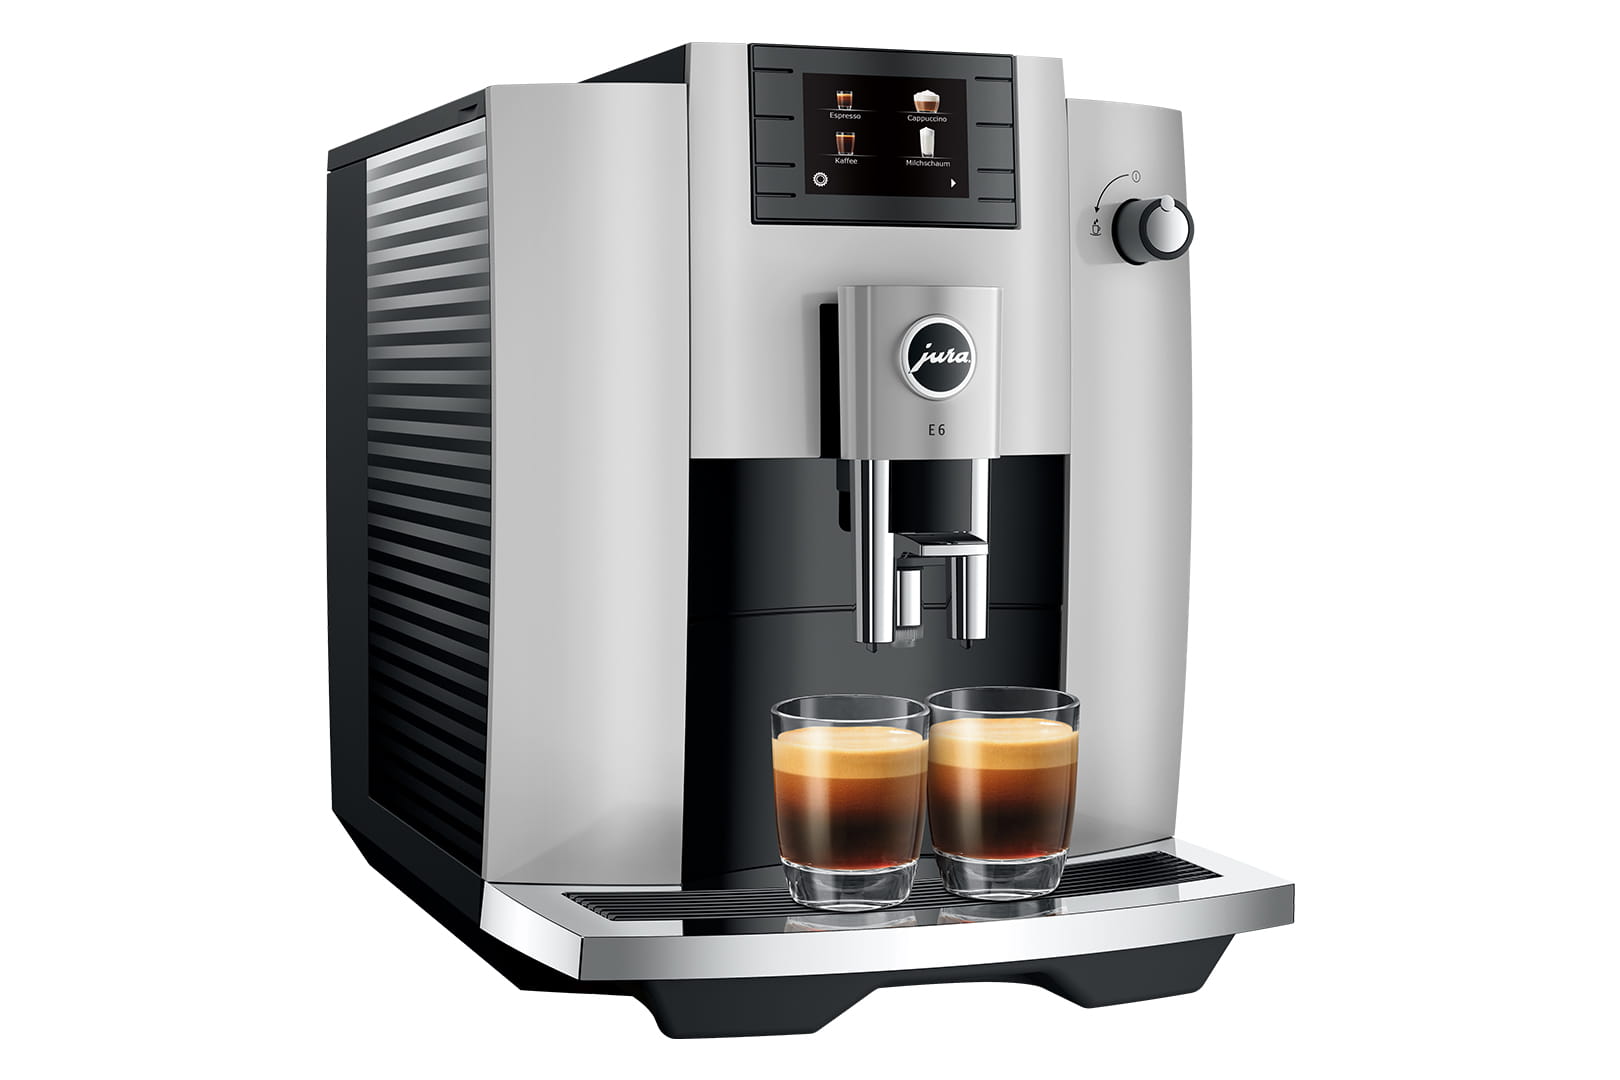 Jura Platinum E6 Domestic Coffee Machine